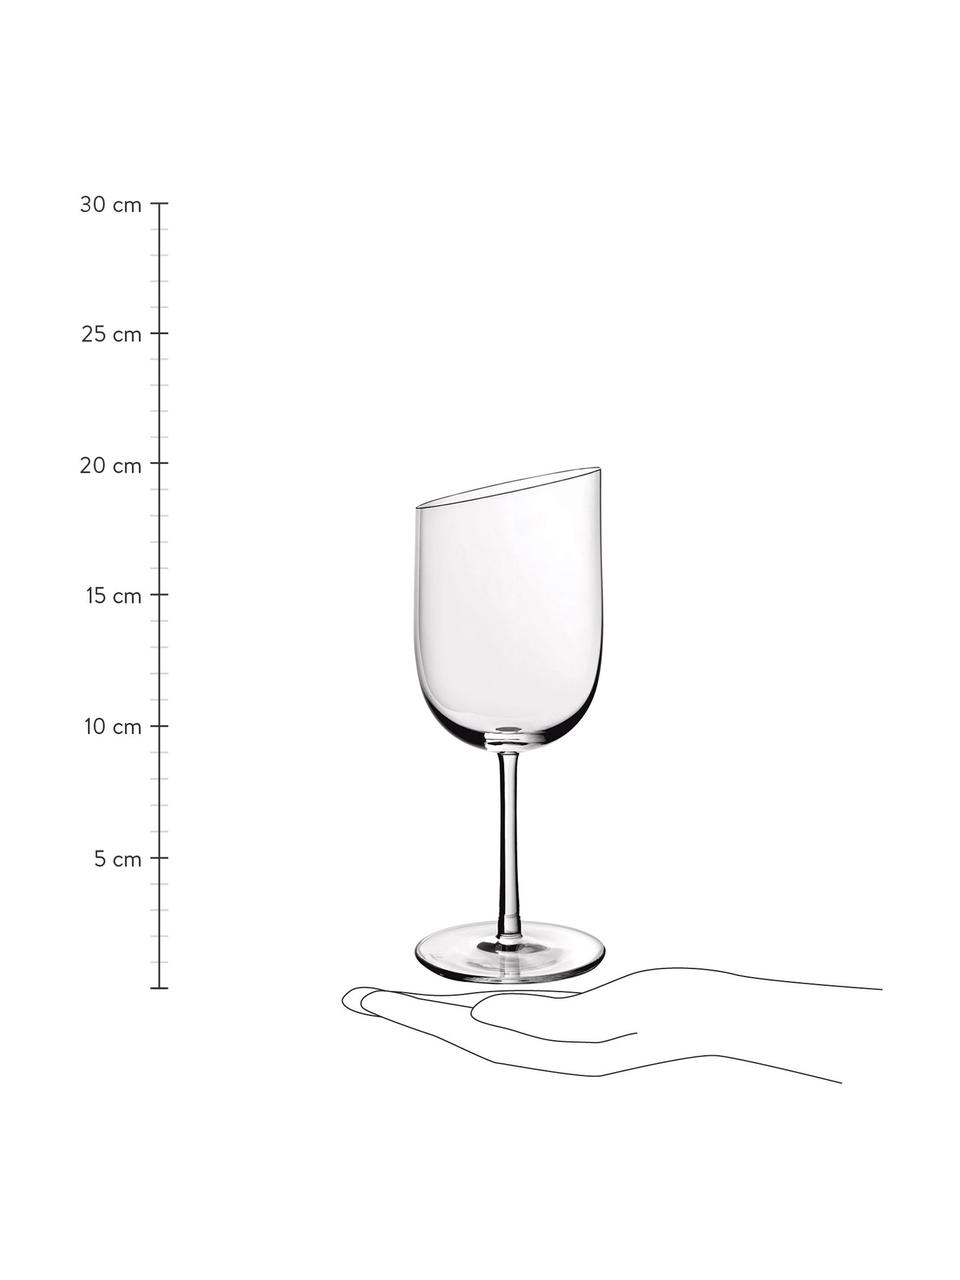 Bicchiere vino bianco NewMoon 4 pz, Vetro, Trasparente, Ø 8 x Alt. 20 cm, 300 ml